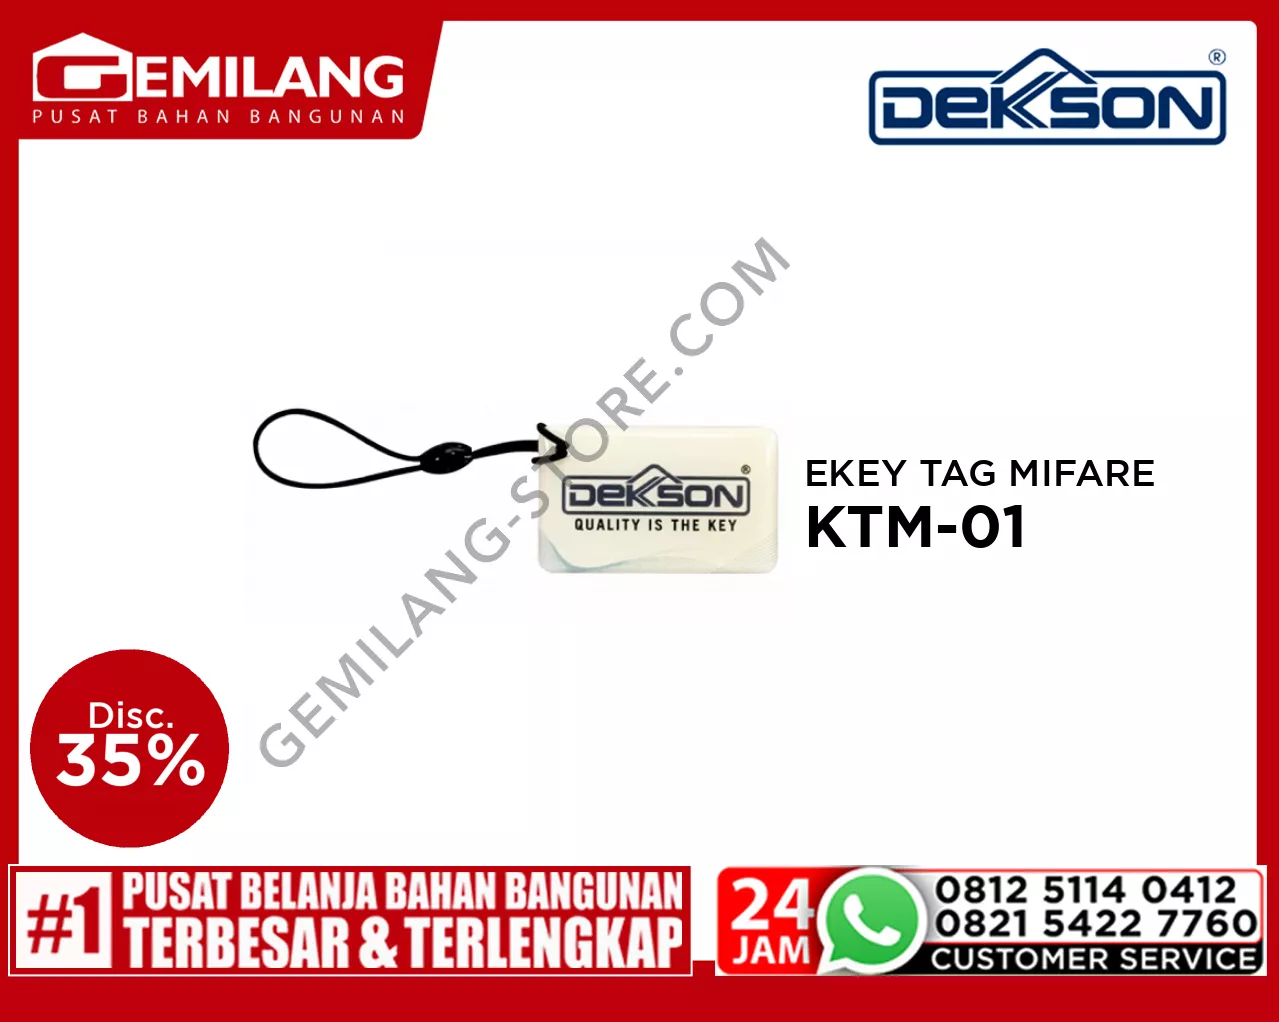 DEKKSON ELECTRONIC KEY TAG (CARD) MIFARE KTM-01